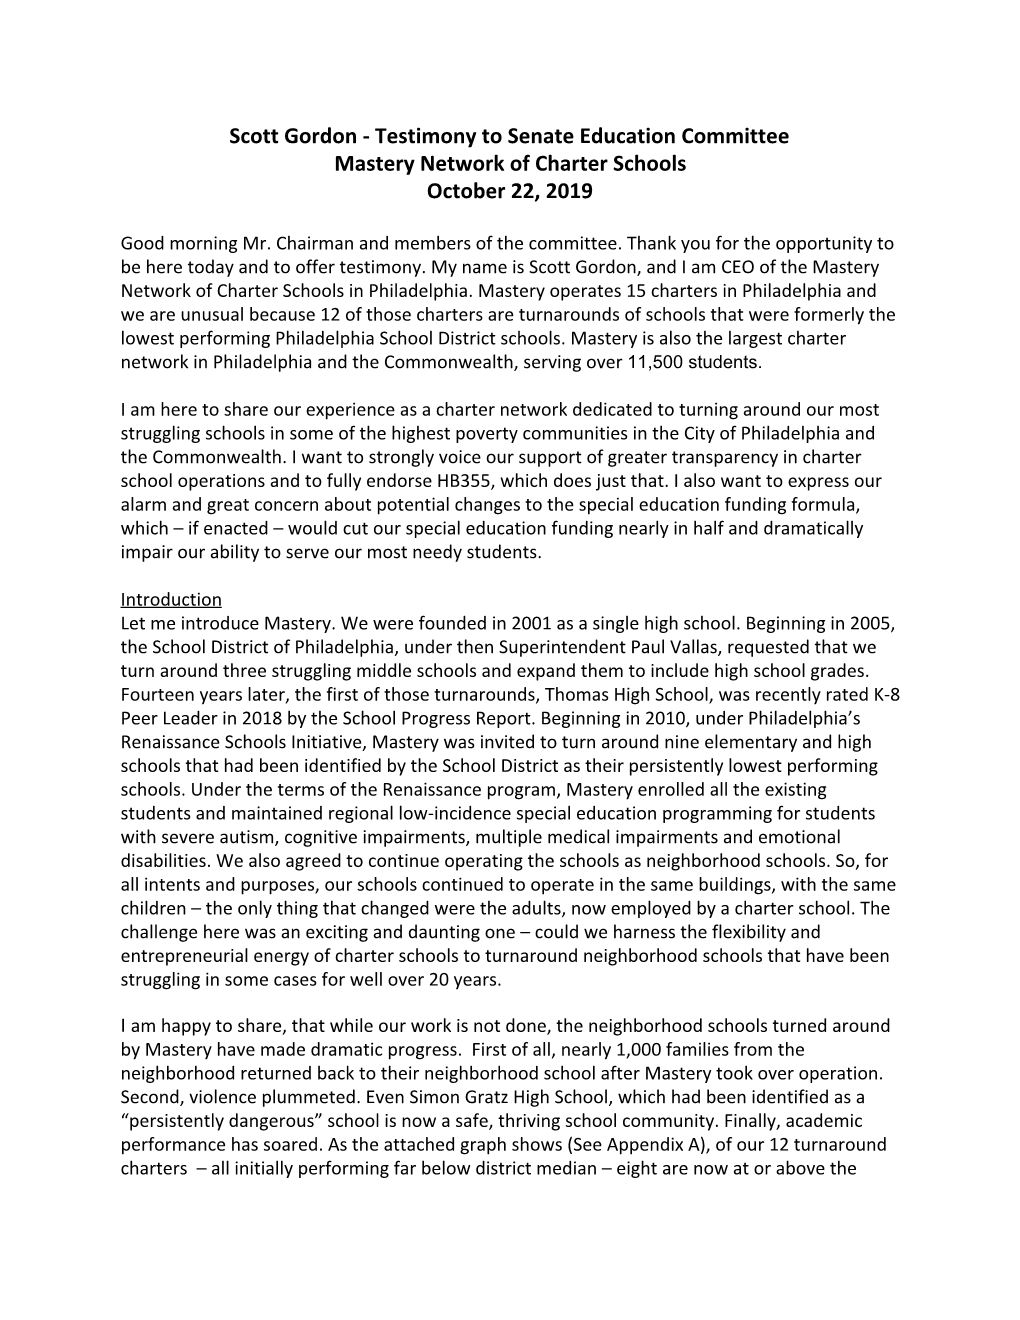 Scott Gordon - Testimony to Senate Education Committee Mastery Network of Charter Schools October 22, 2019